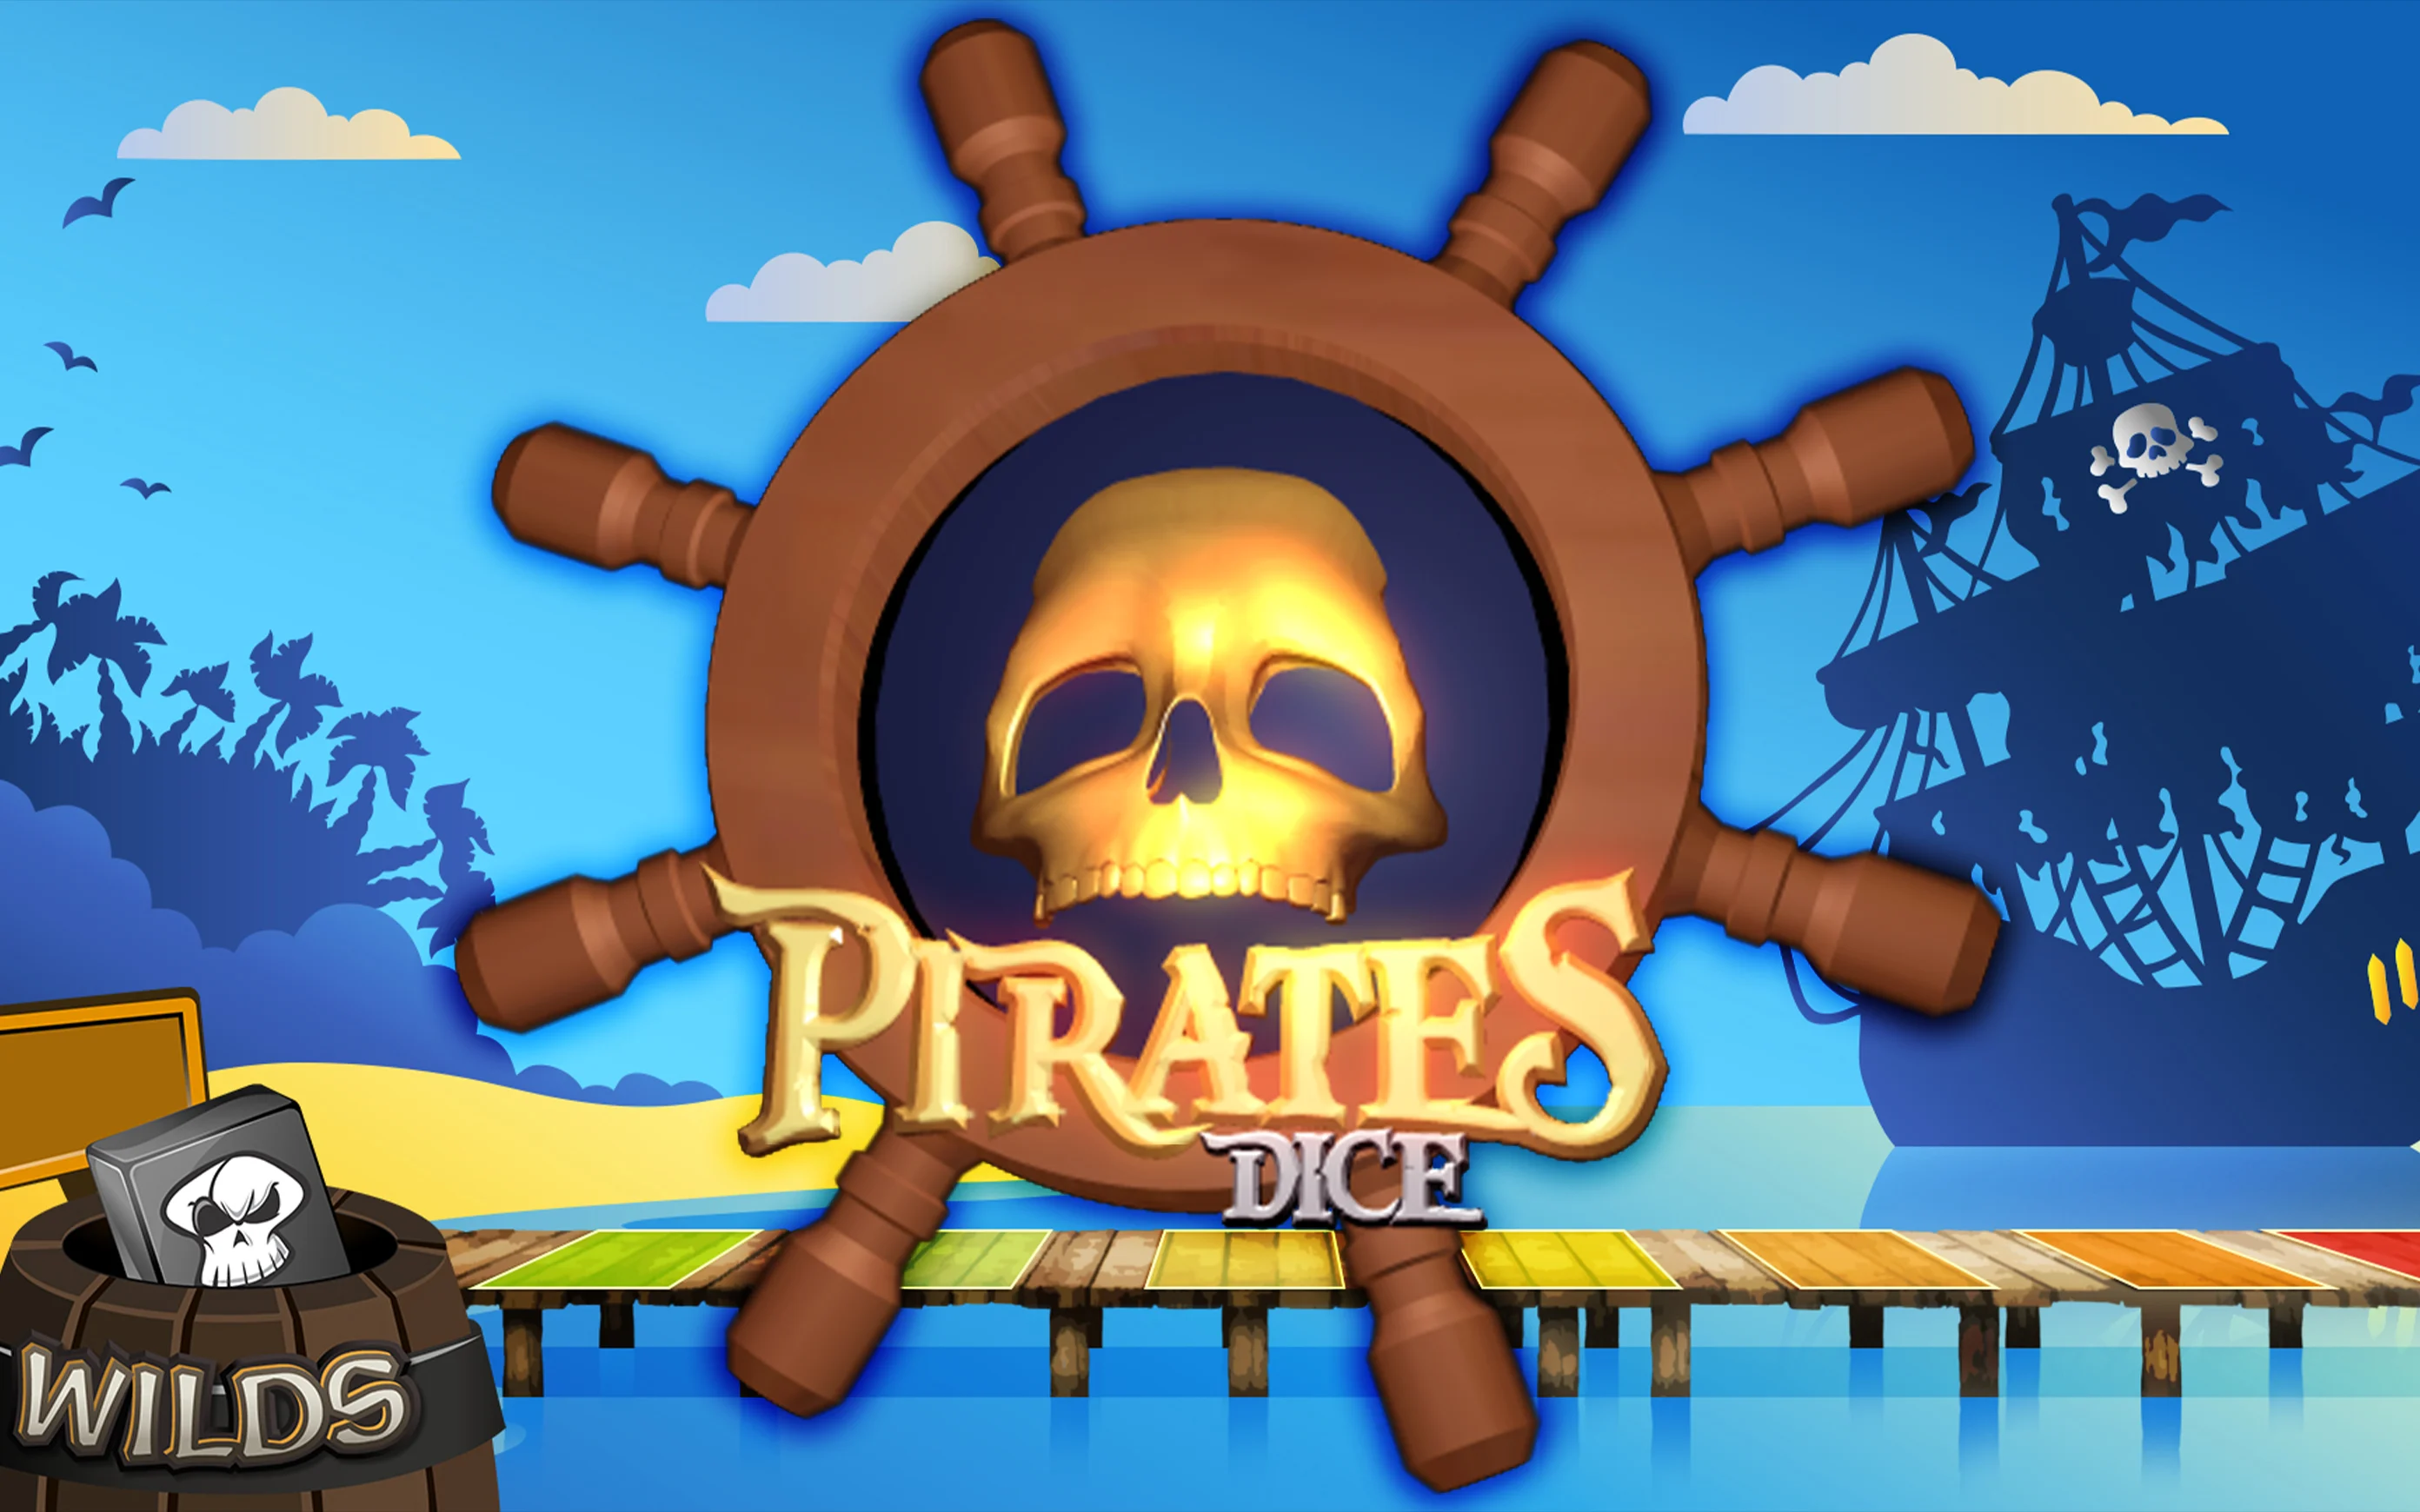 Play Pirates Dice on Starcasino.be online casino